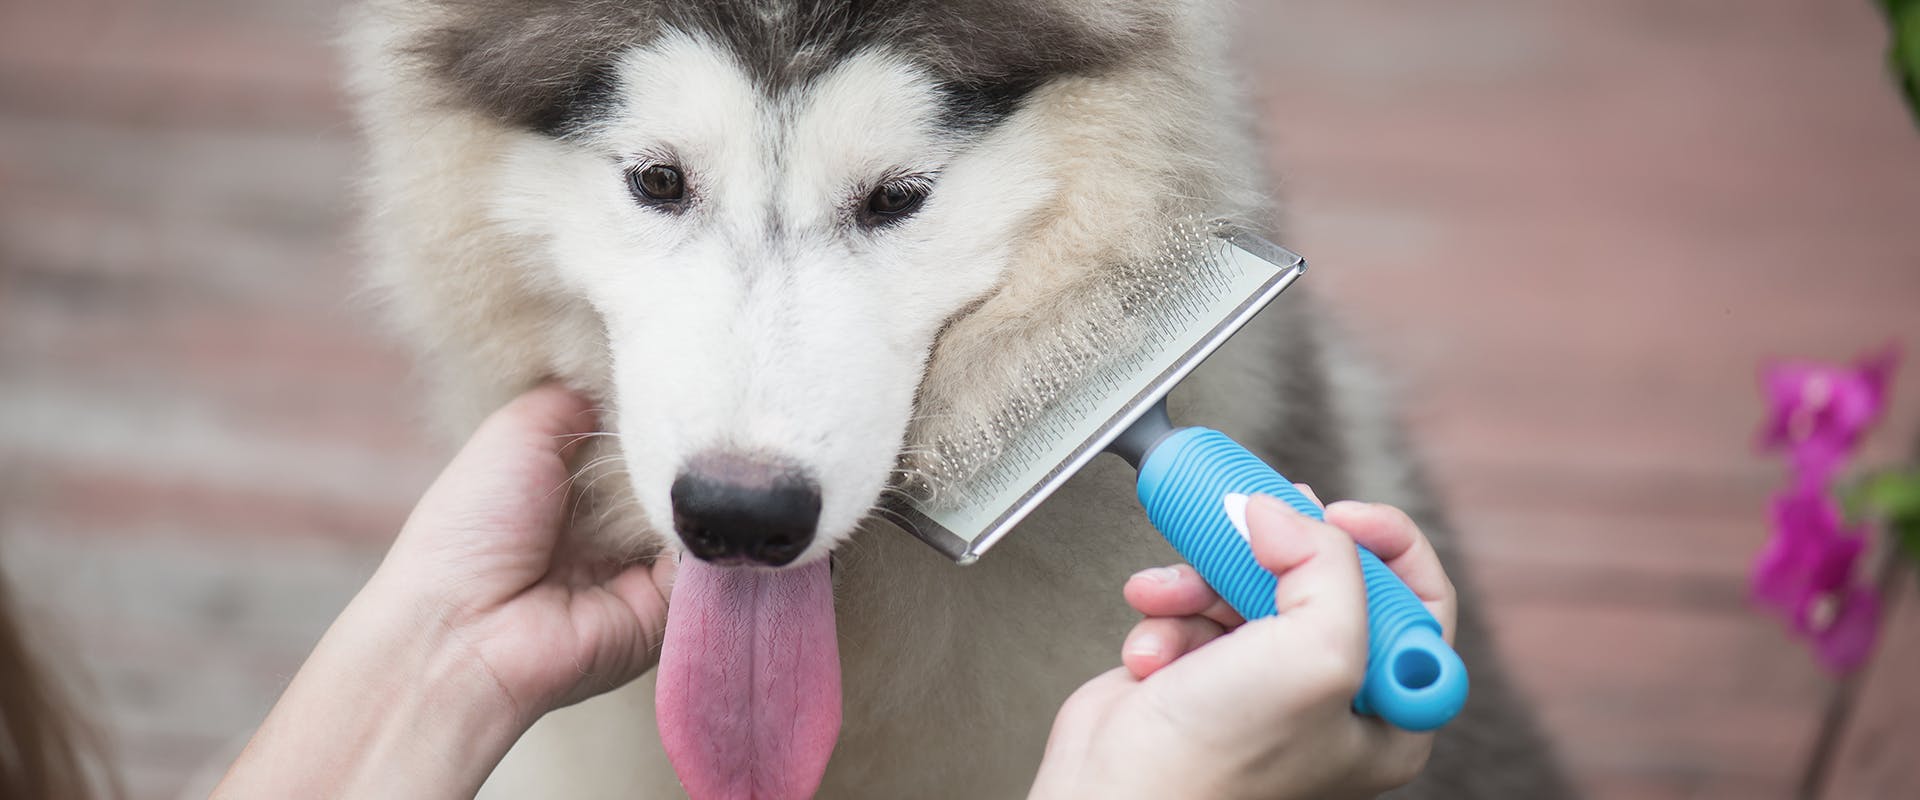 Best dog brushes for shedding - a dog being brushed with a deshedding brush